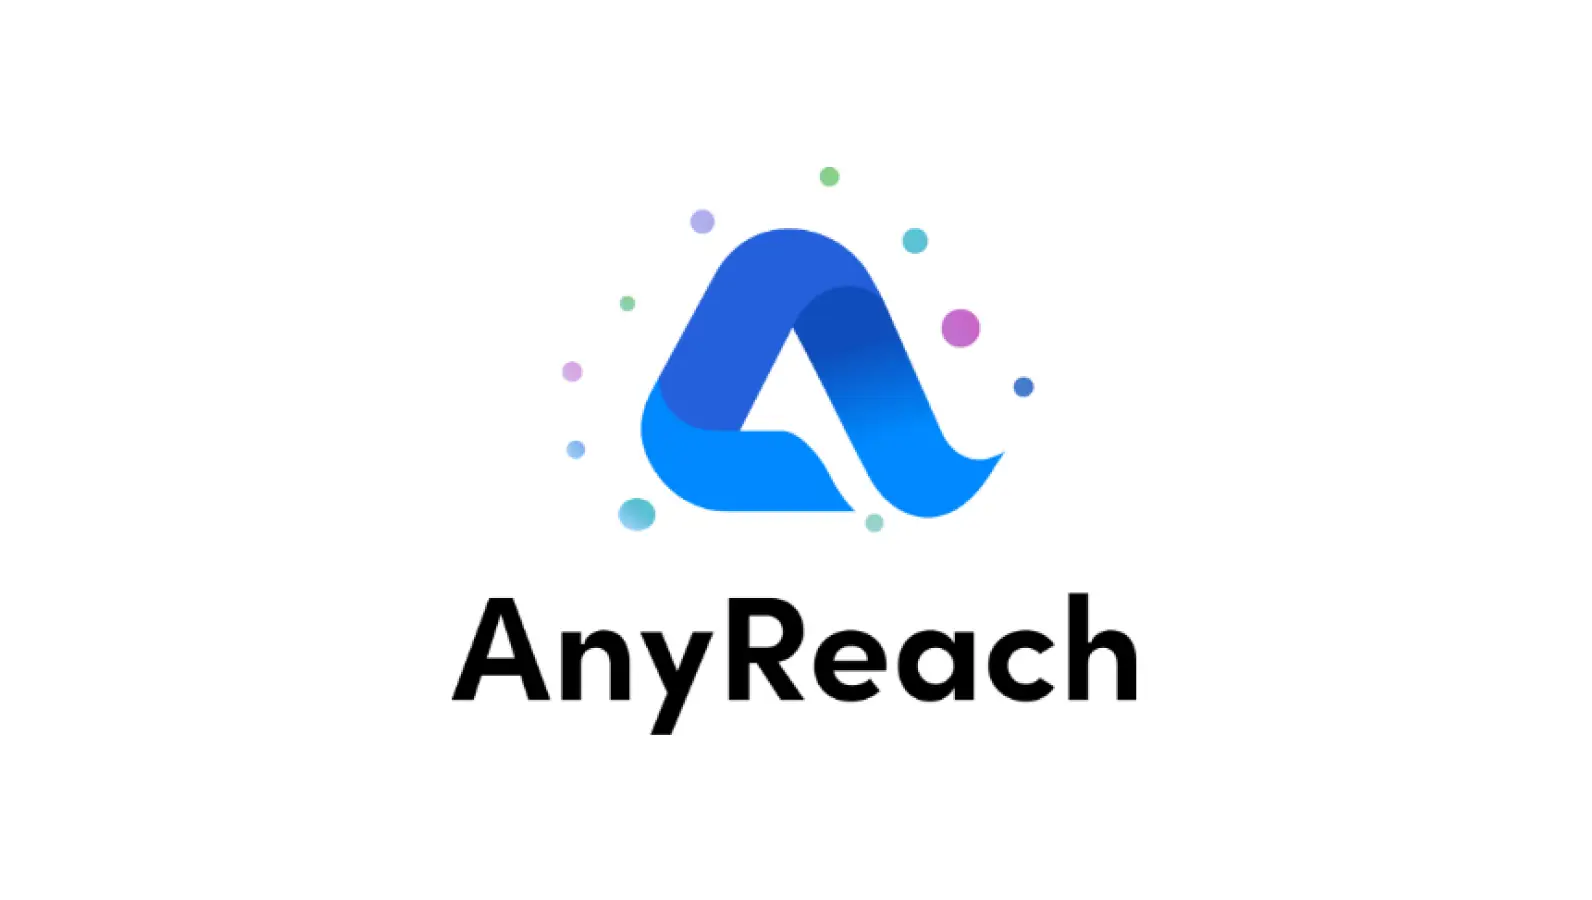 AnyReach、シードラウンドで1.1億円の資金調達。サービスローンチから8ヶ月間で500社の導入を突破の画像